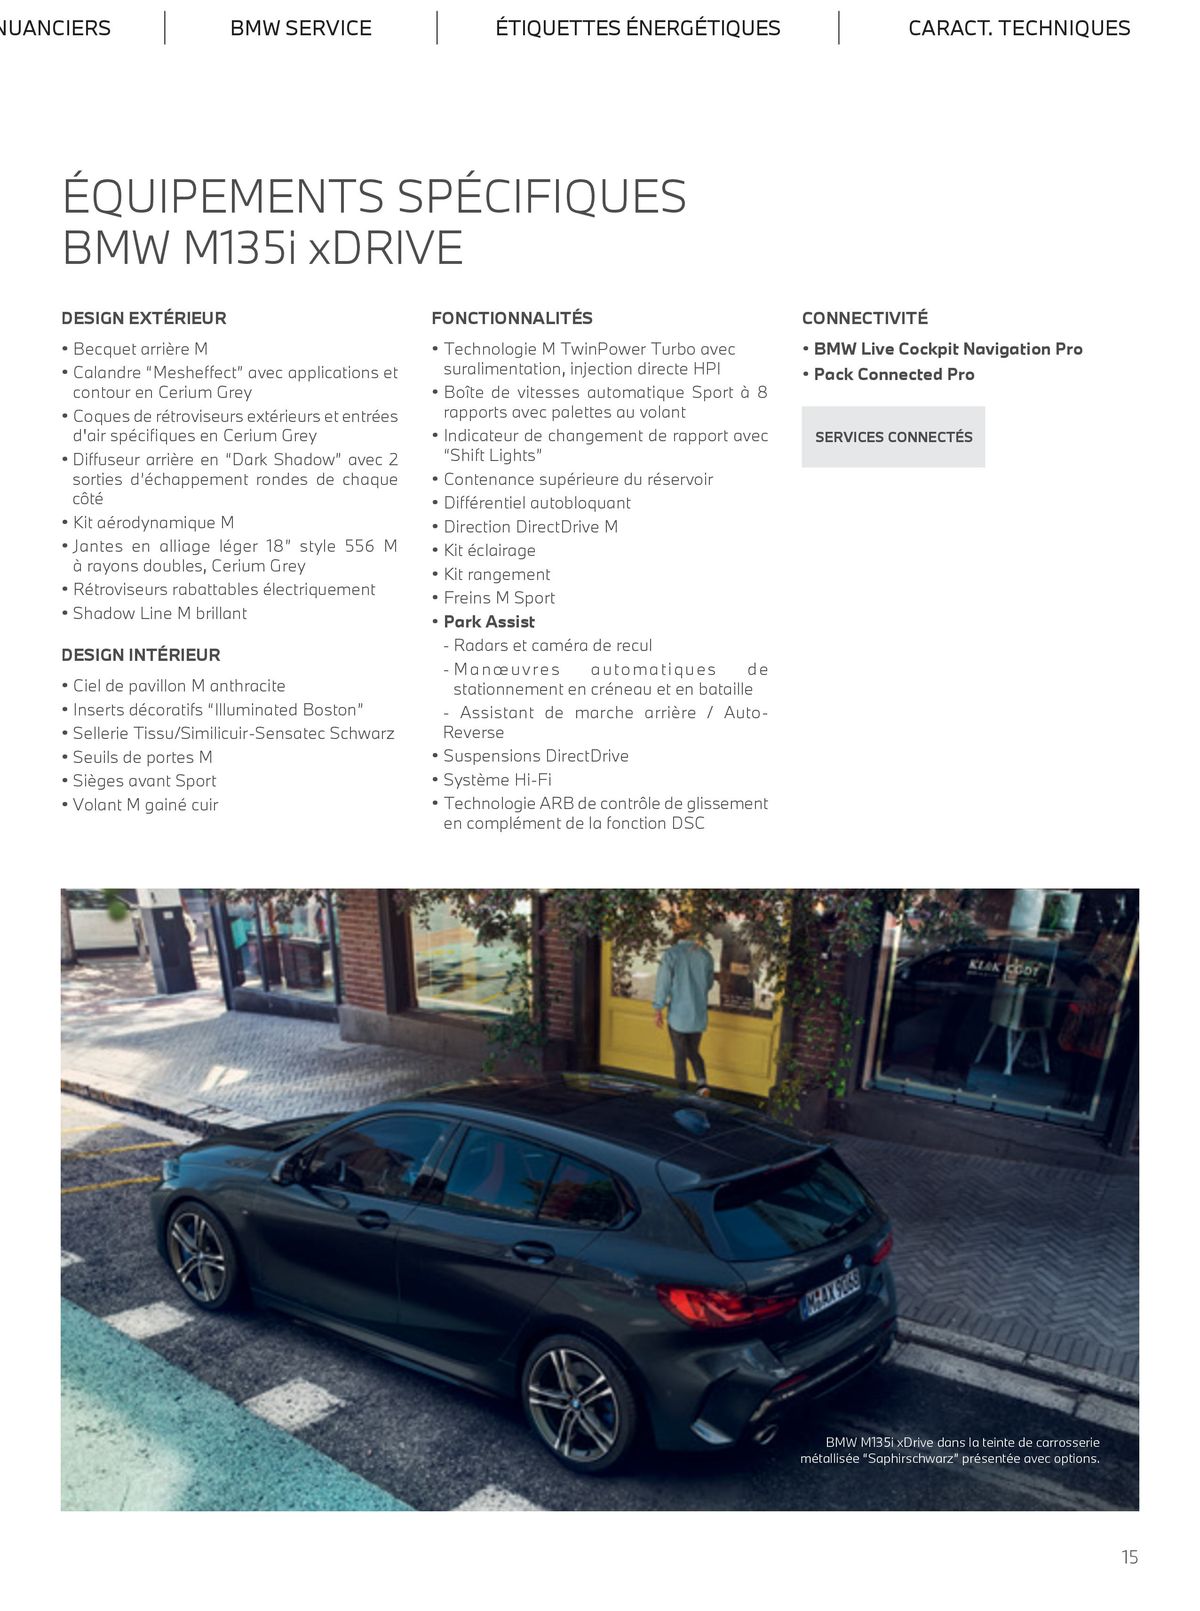 Catalogue The BMW SÉRIE 1, page 00015